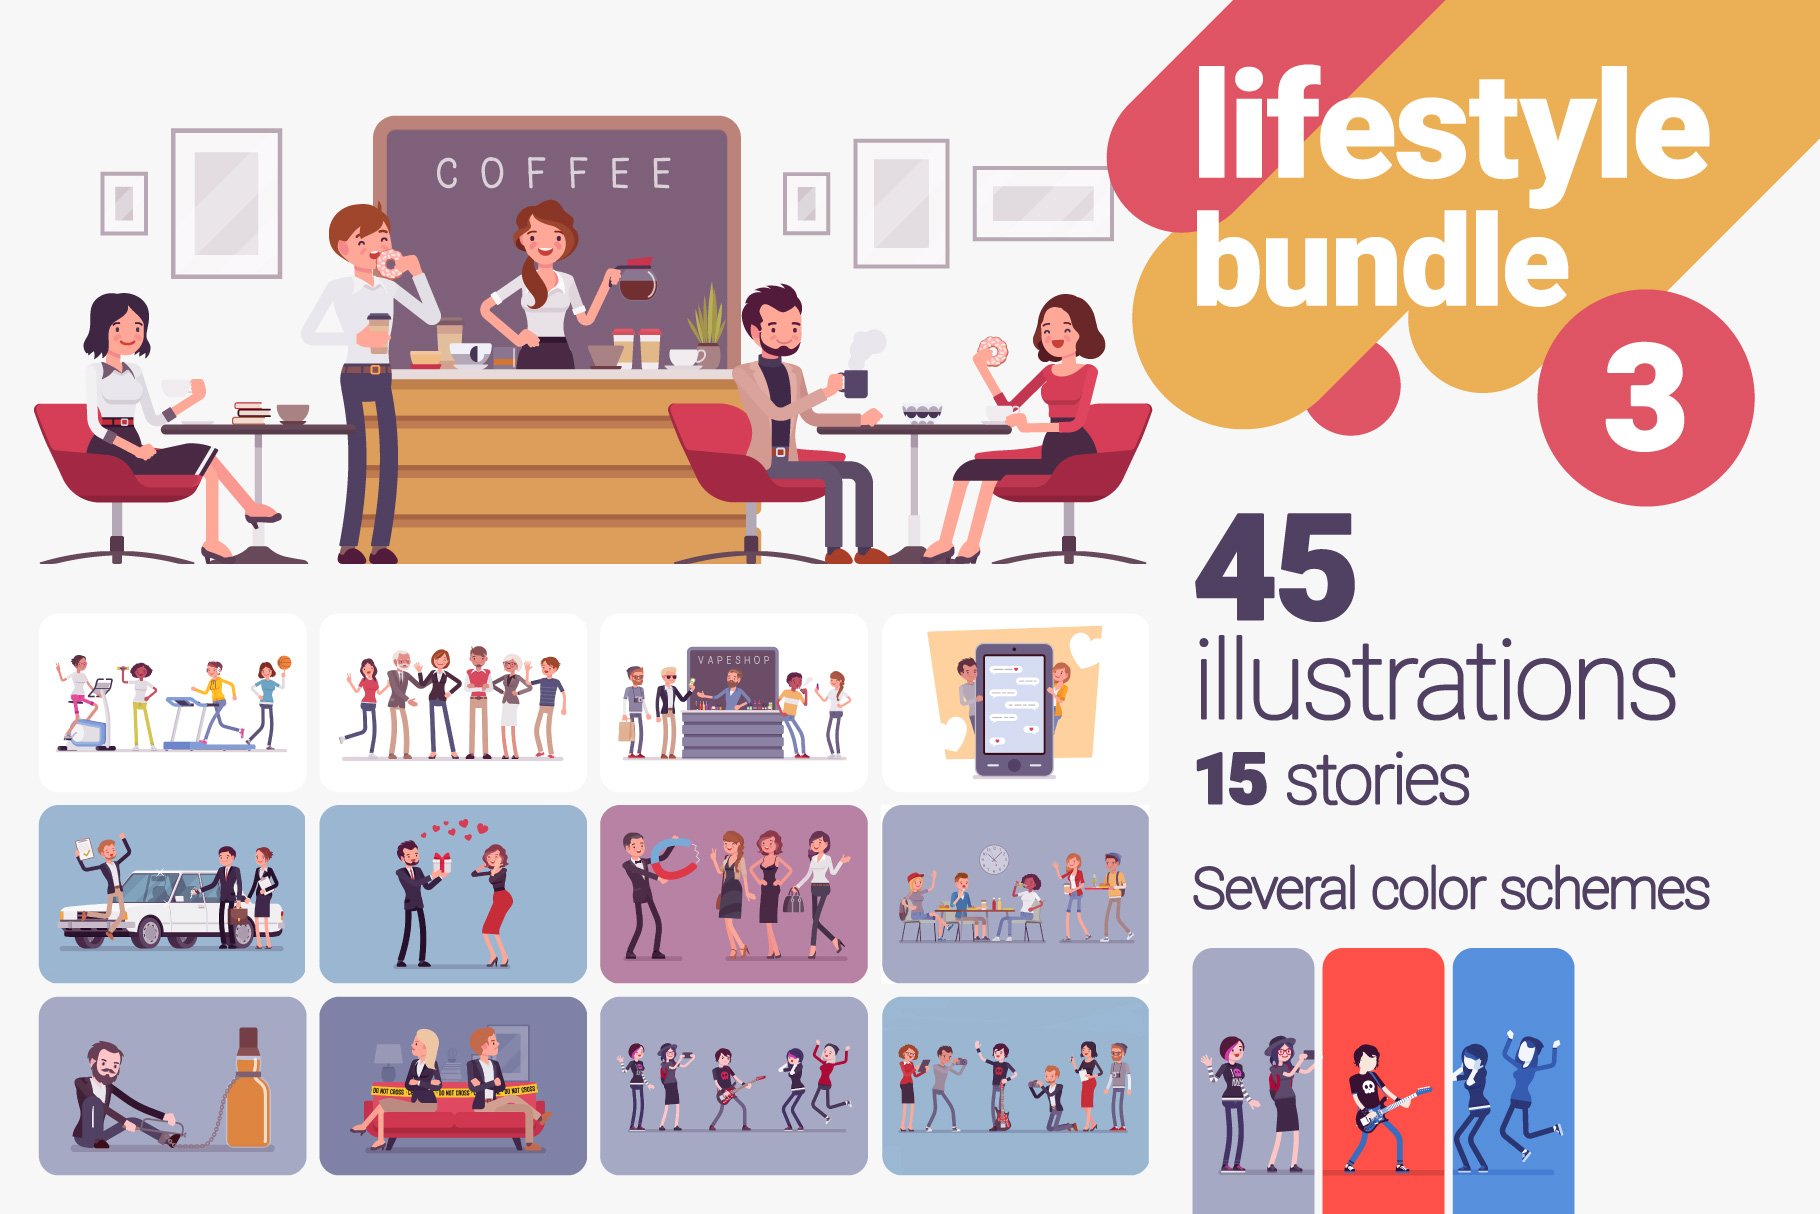 Lifestyle Illustrations Bundle Vol.3 cover image.